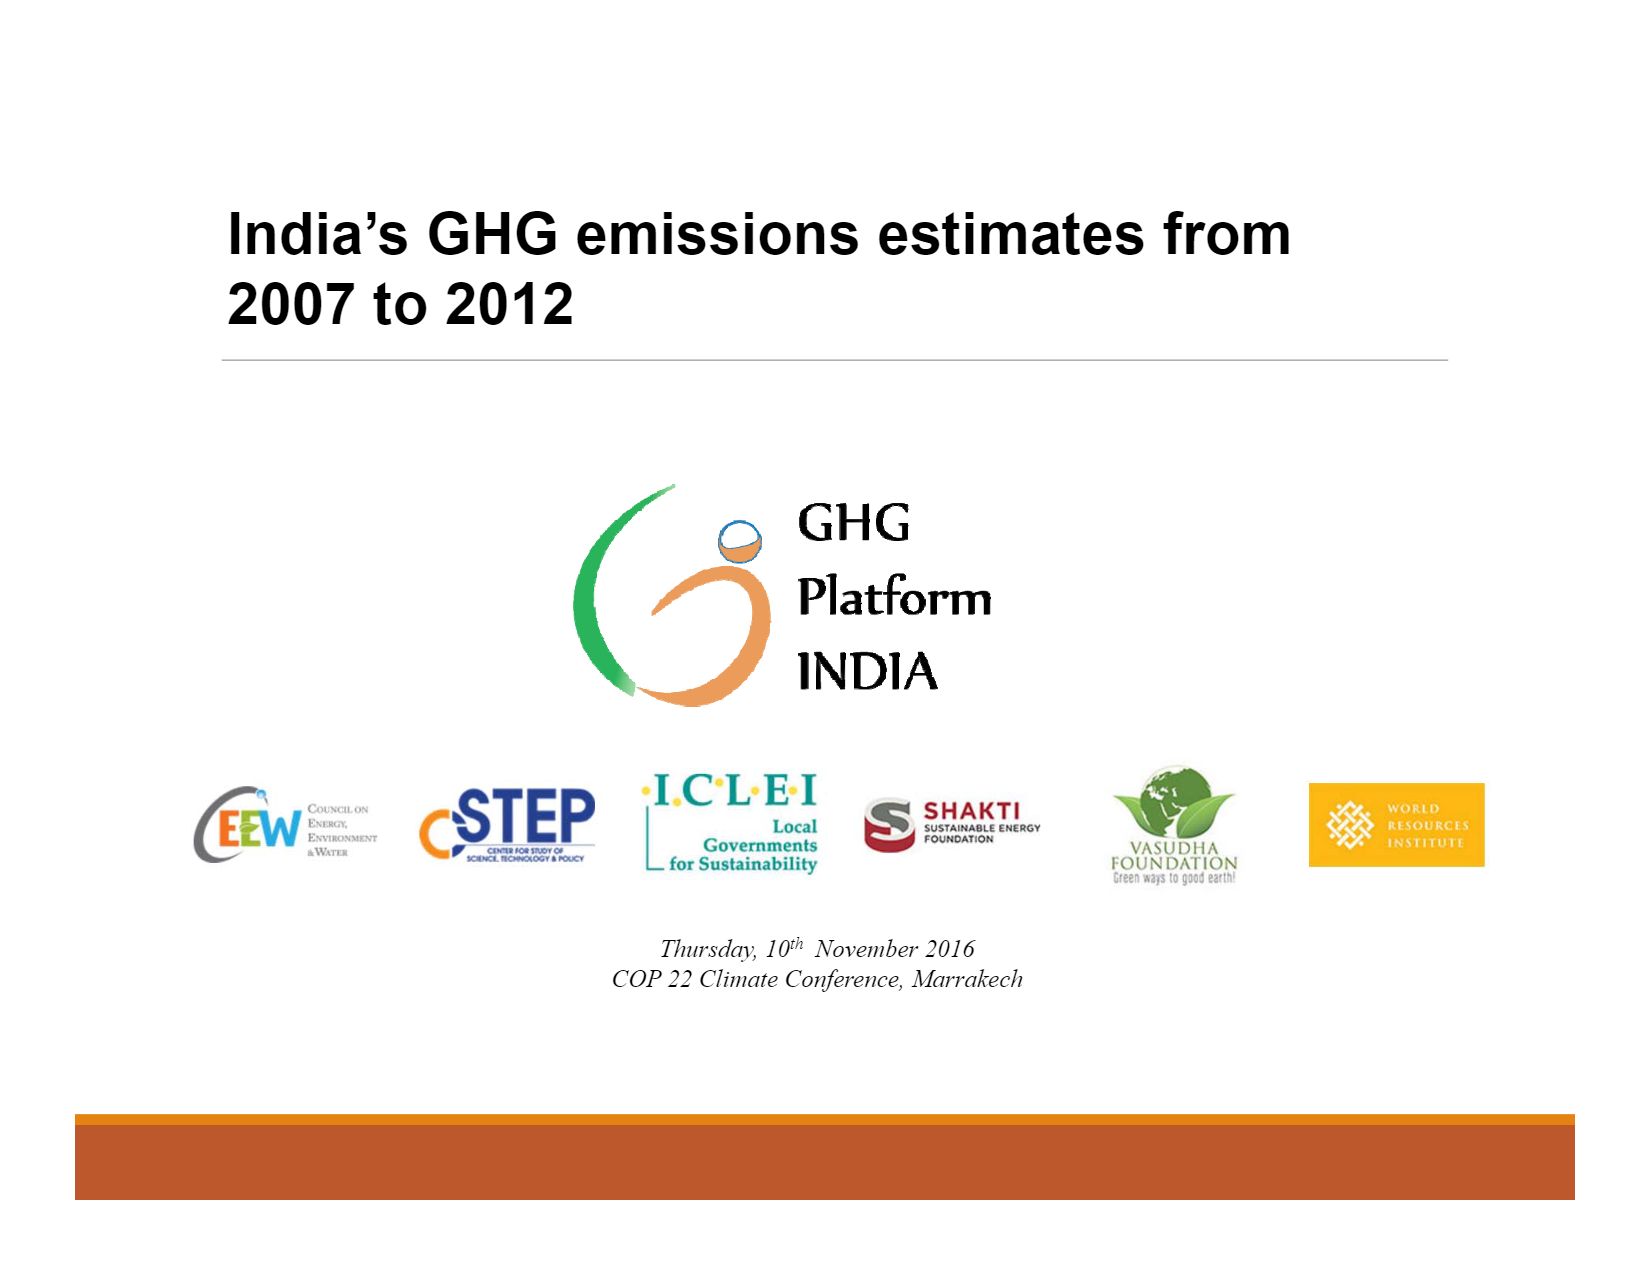 GHGPI-PhaseI-Presentation at COP 22-Nov16-1